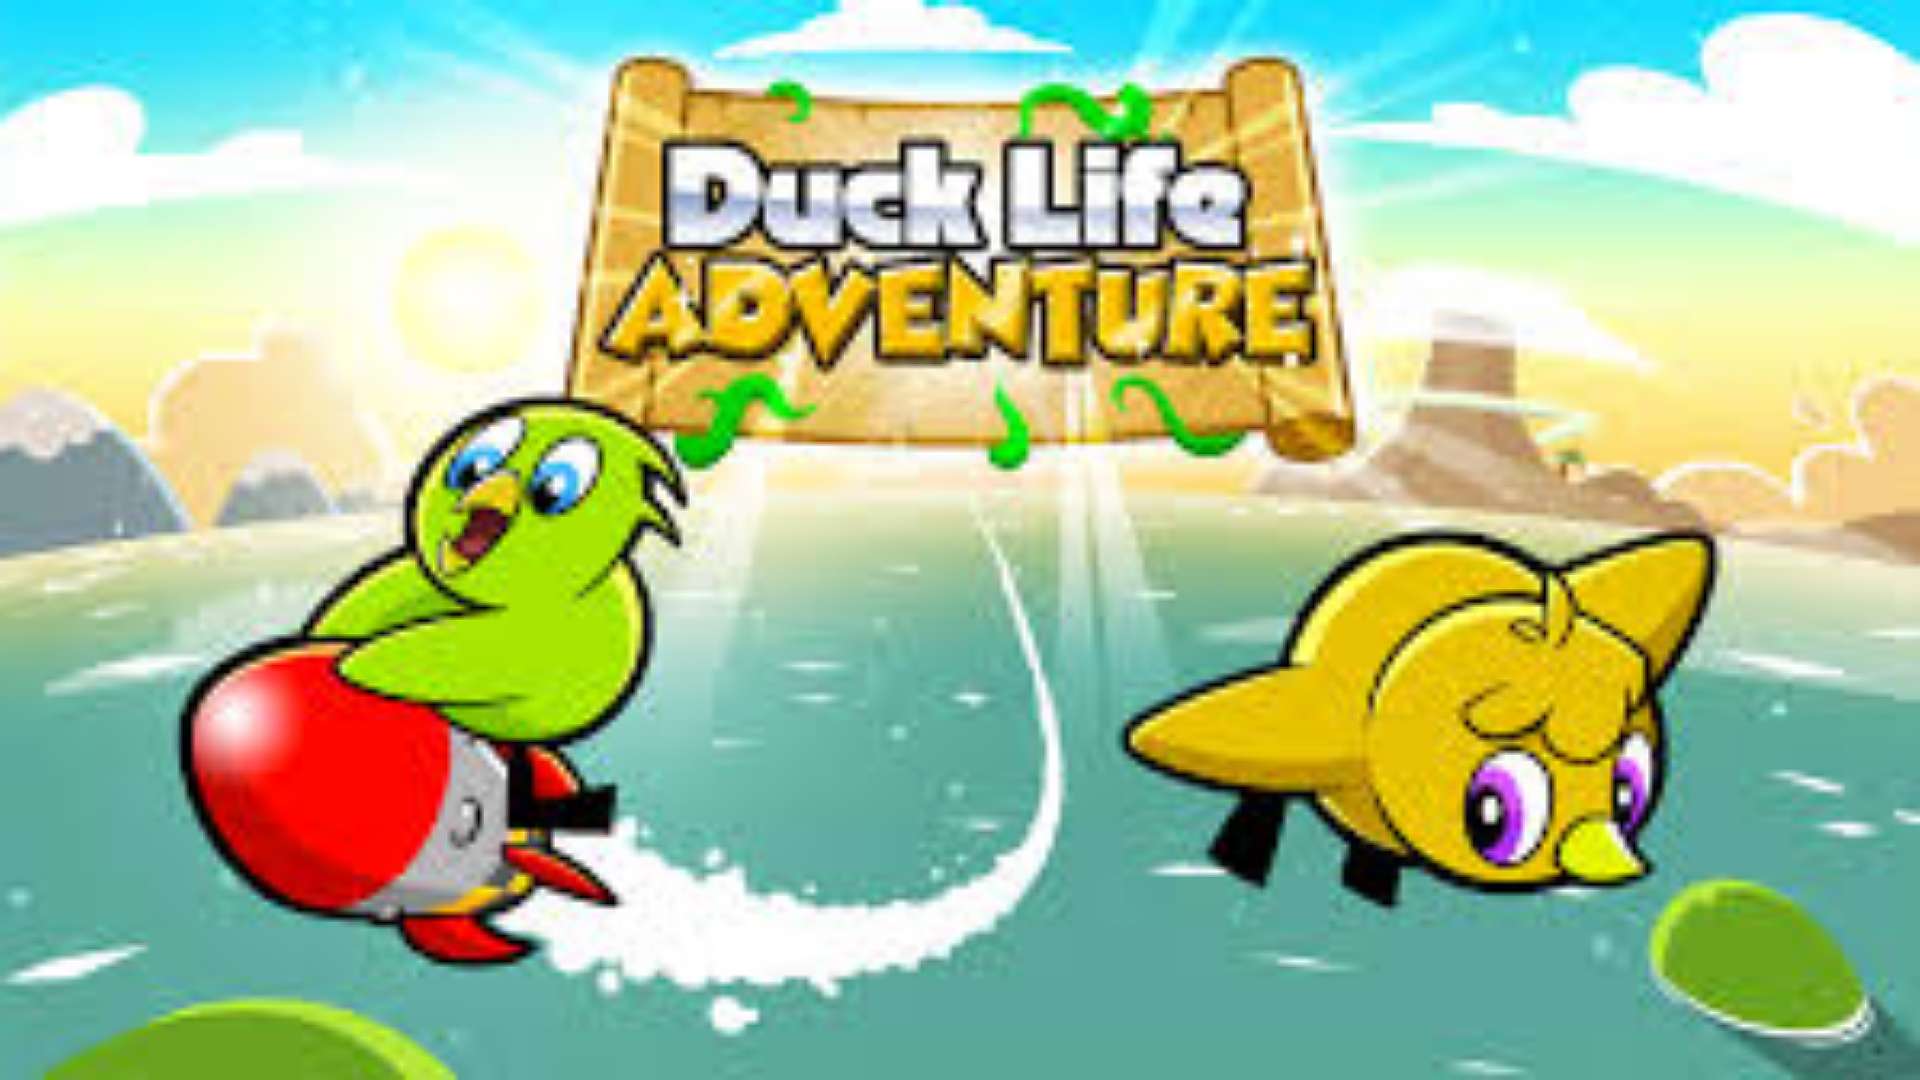 duck life adventure